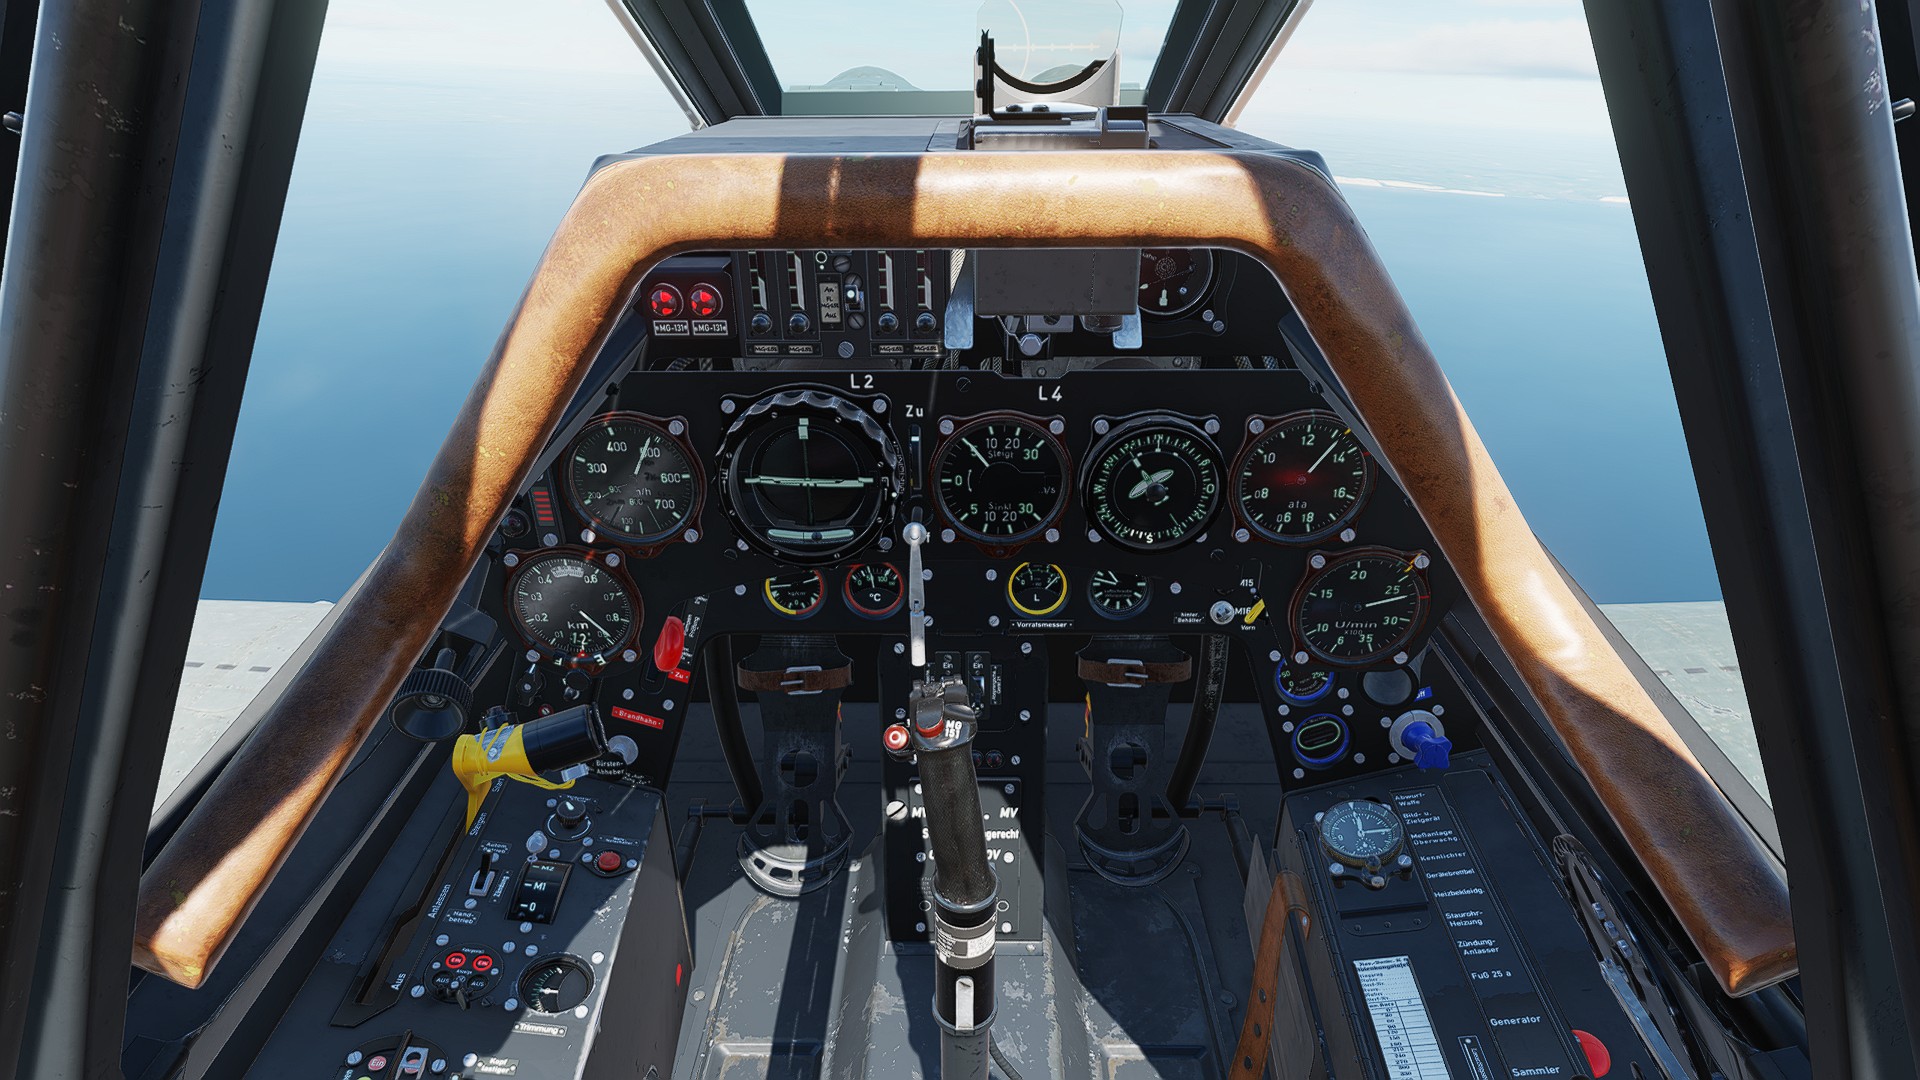 FW190 A8 Cockpit Mod